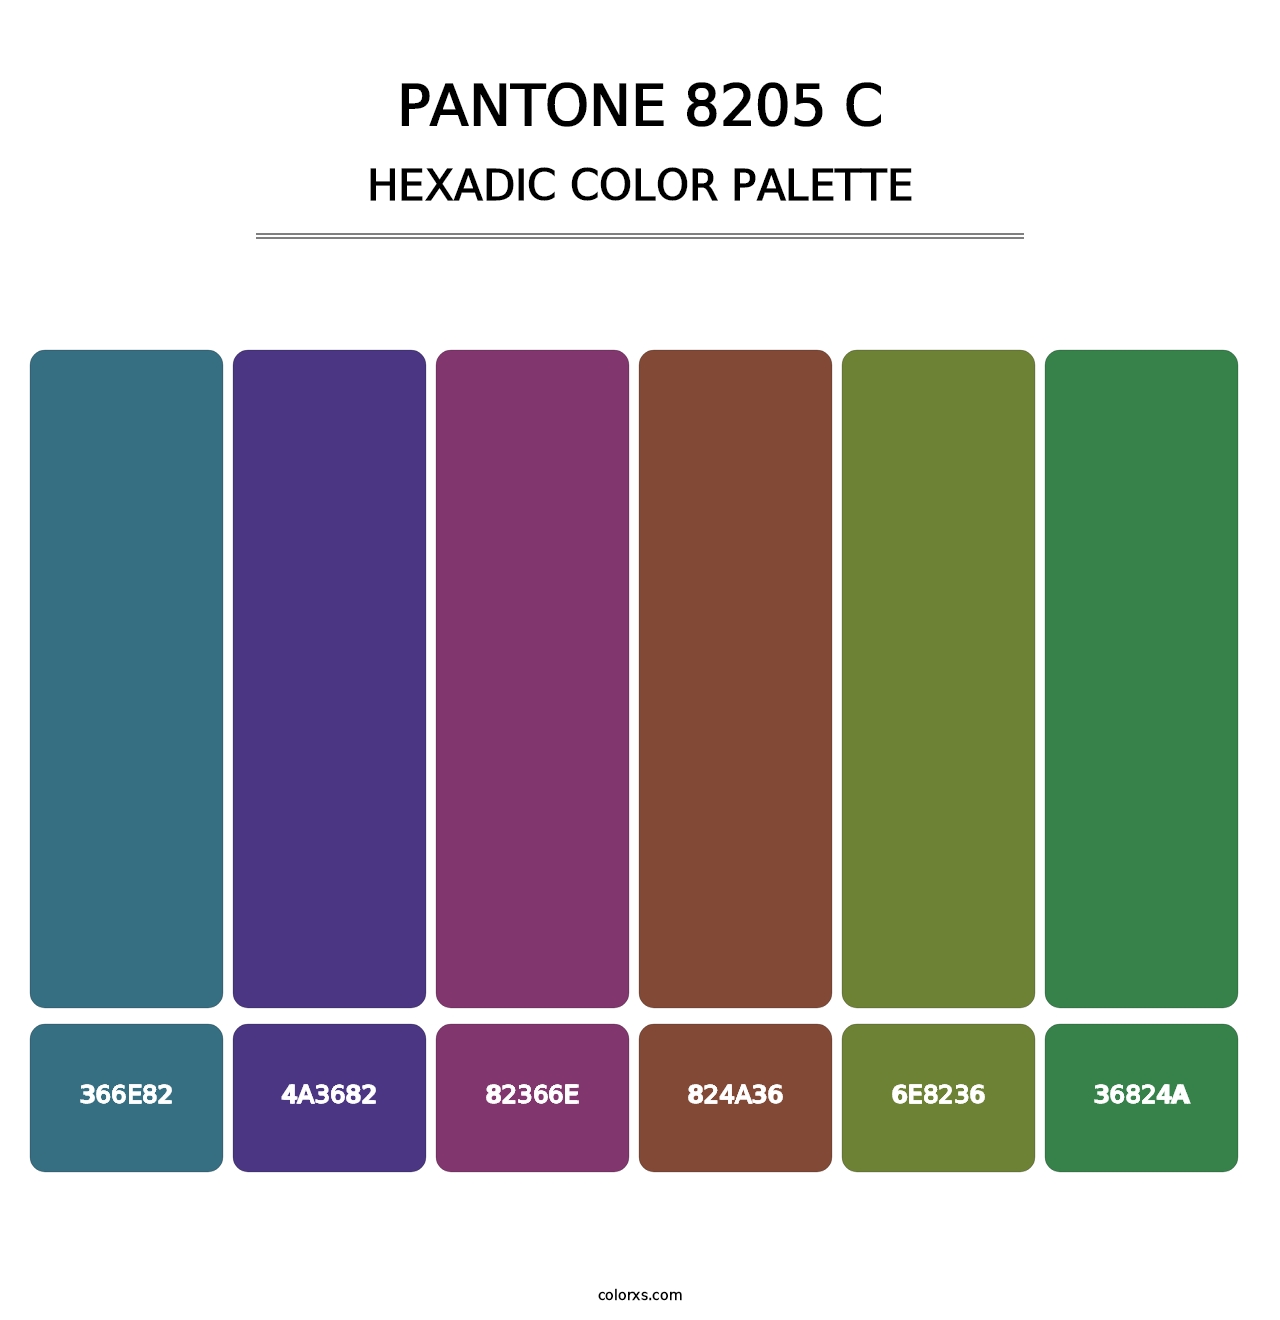 PANTONE 8205 C - Hexadic Color Palette